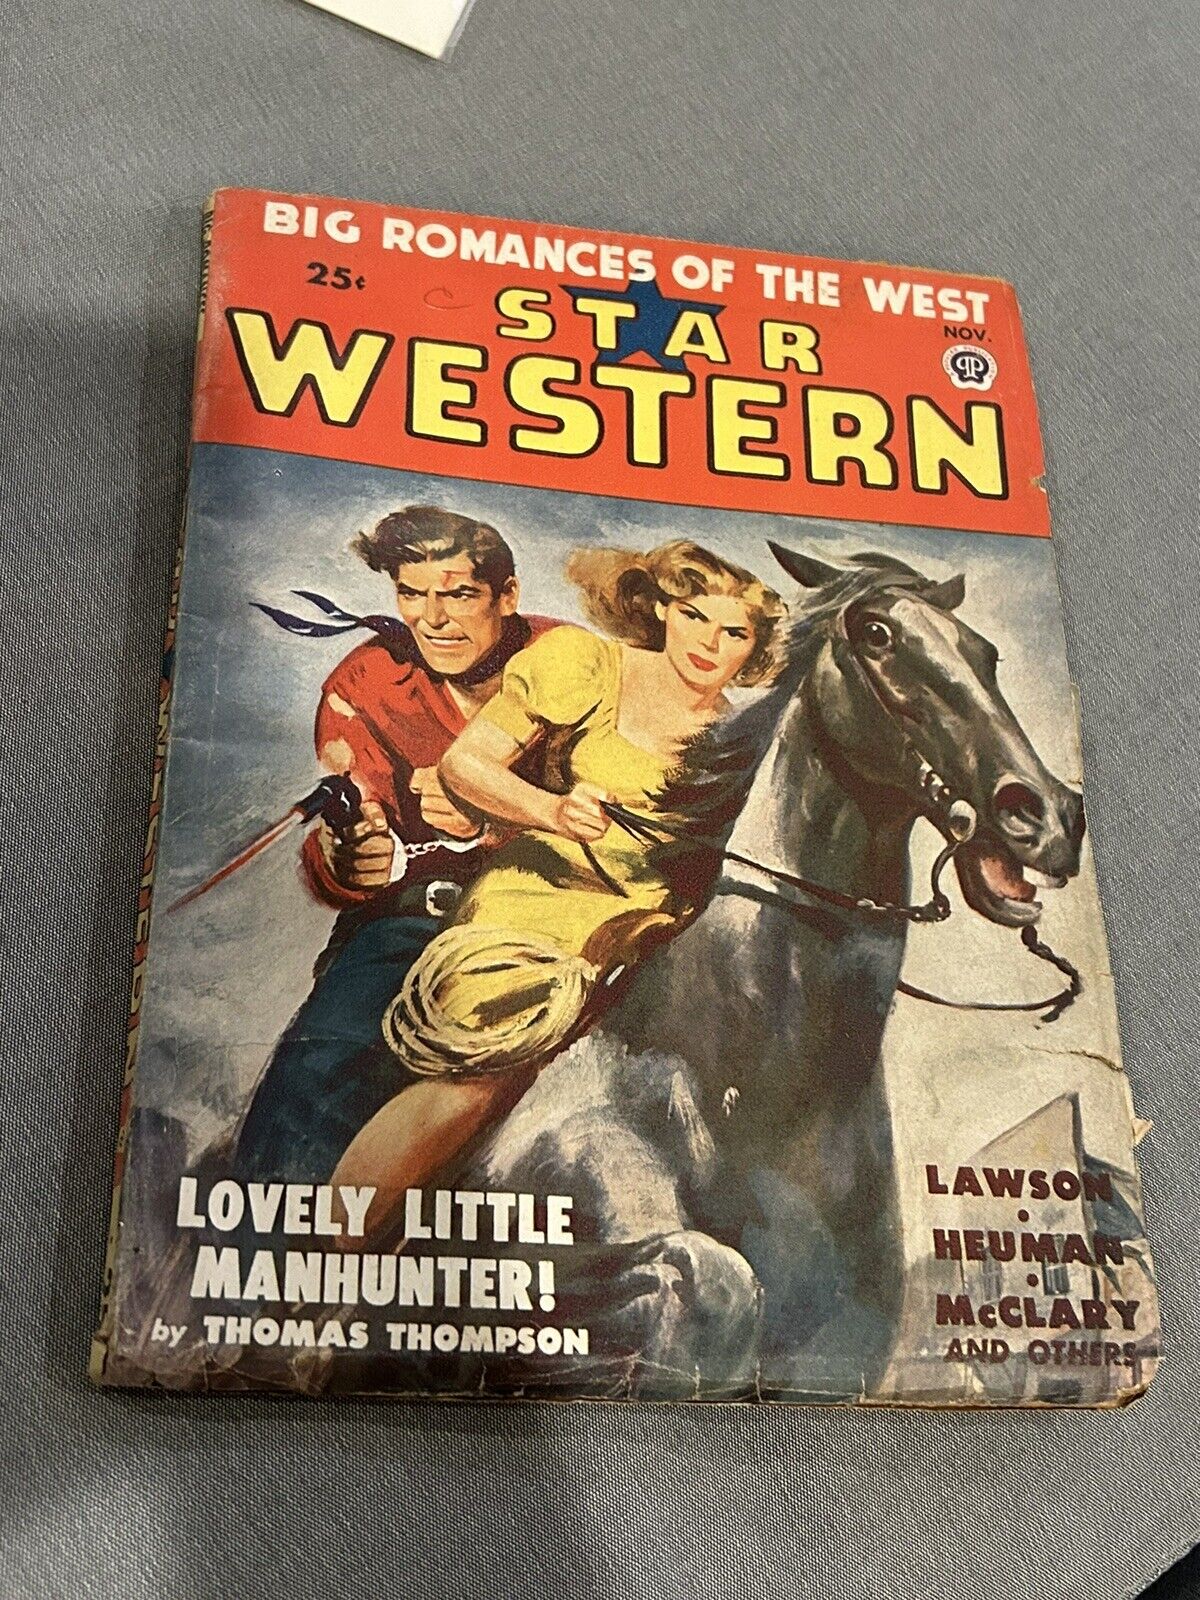 Star Western Magazine, Nov 1949 Pulp Fiction, Low Grade